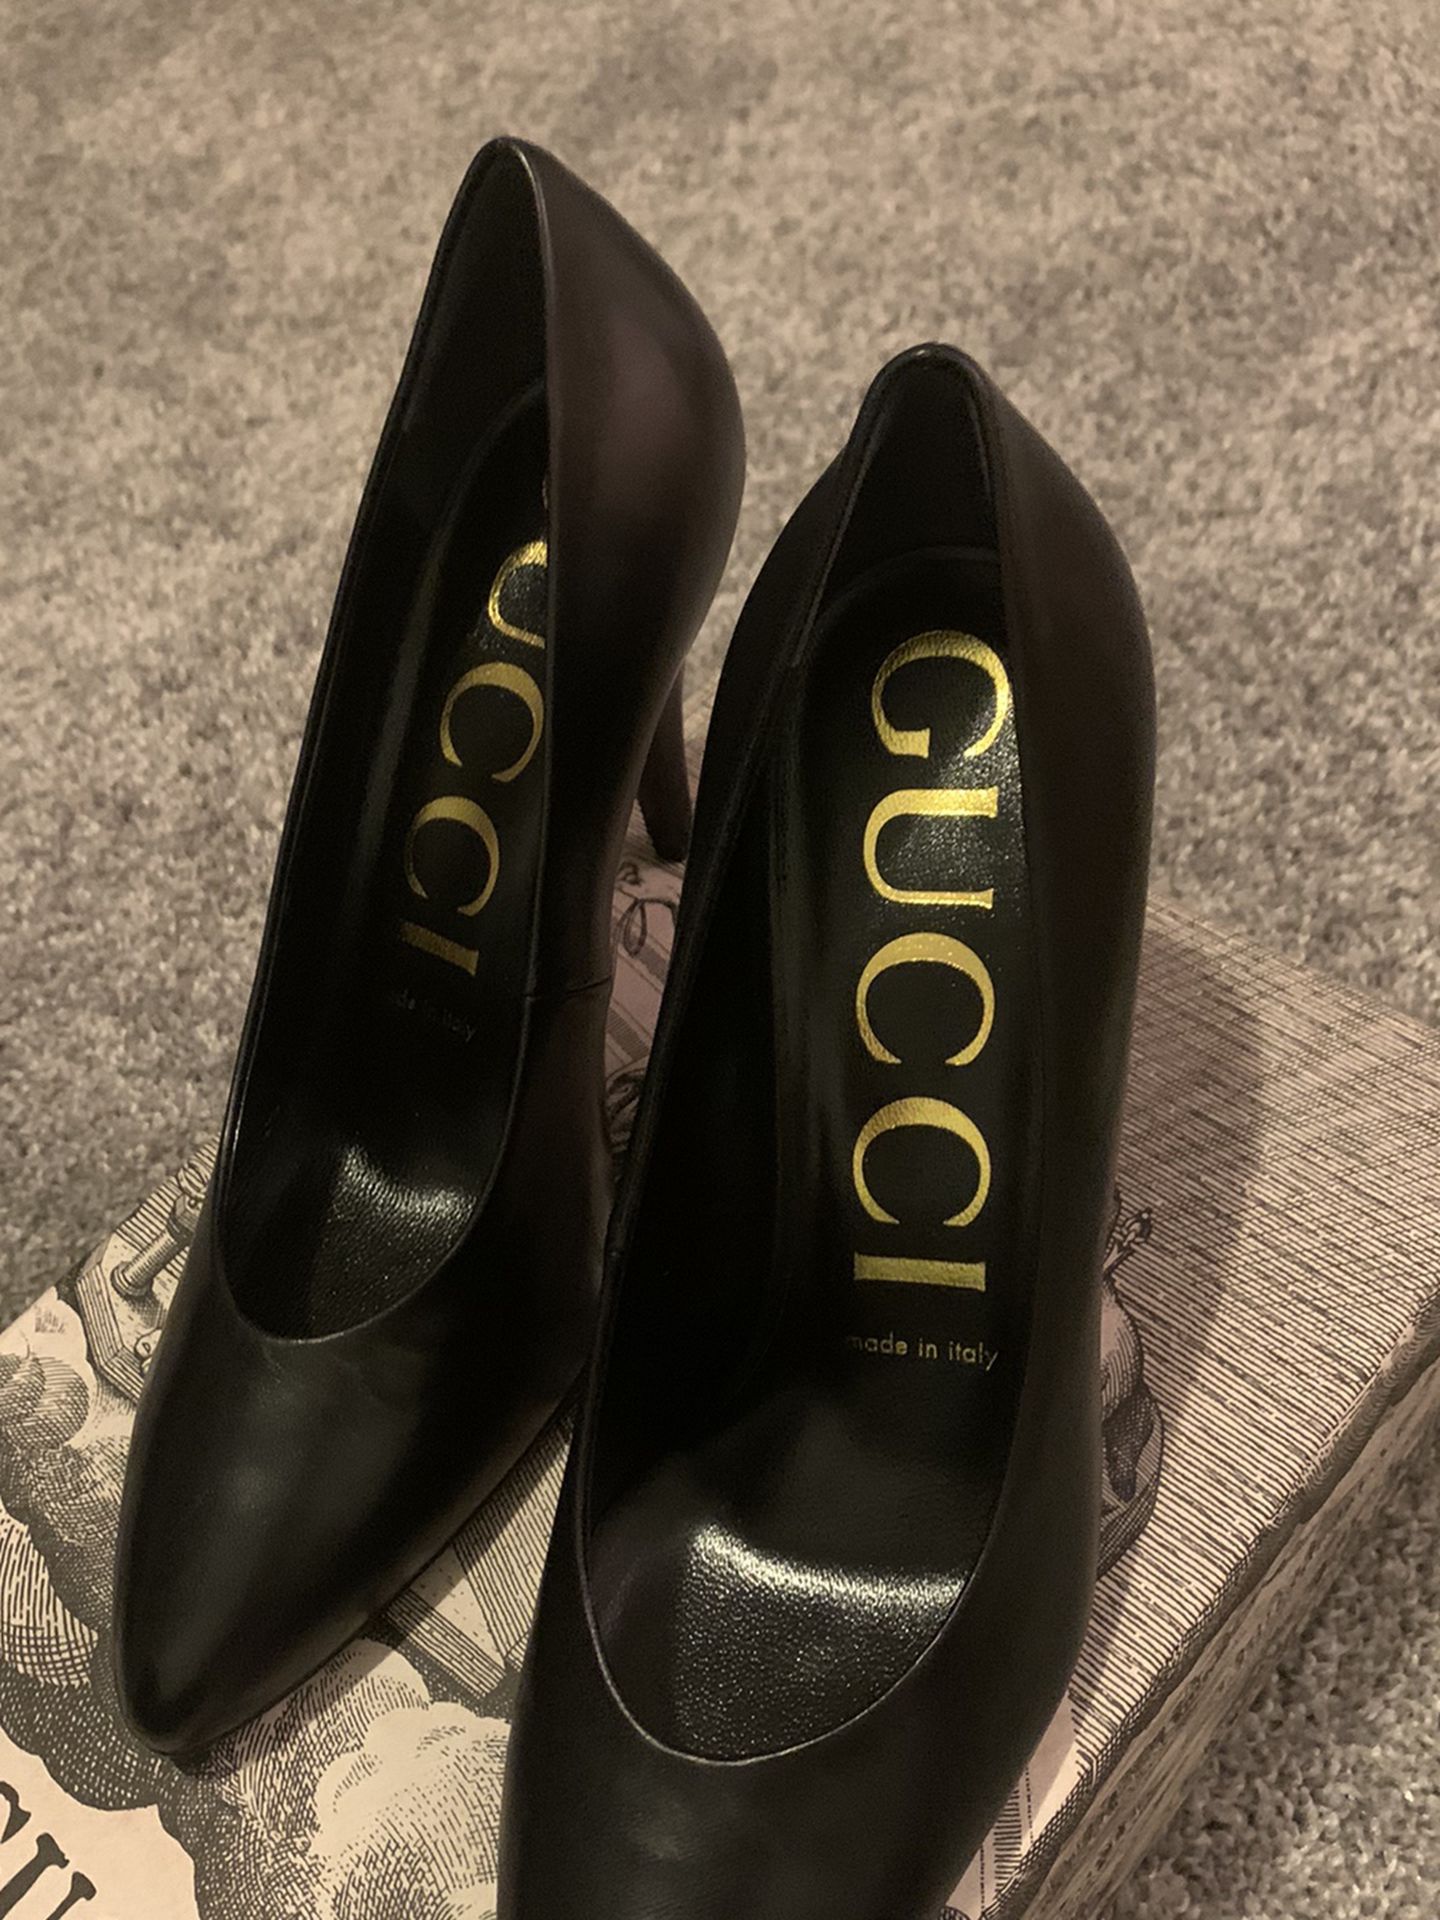 Gucci high heels black brand new